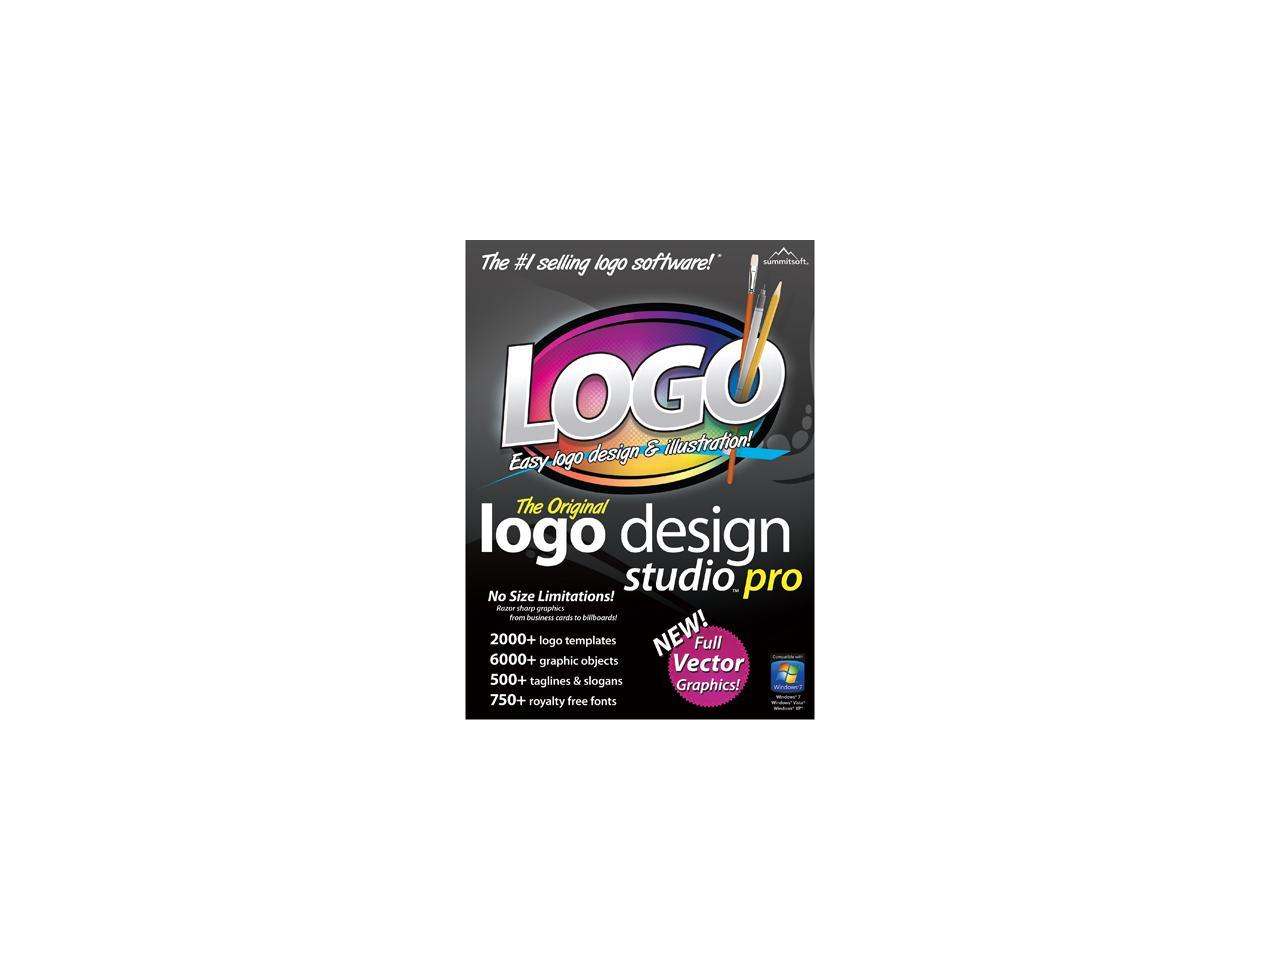 summitsoft logo design studio pro review